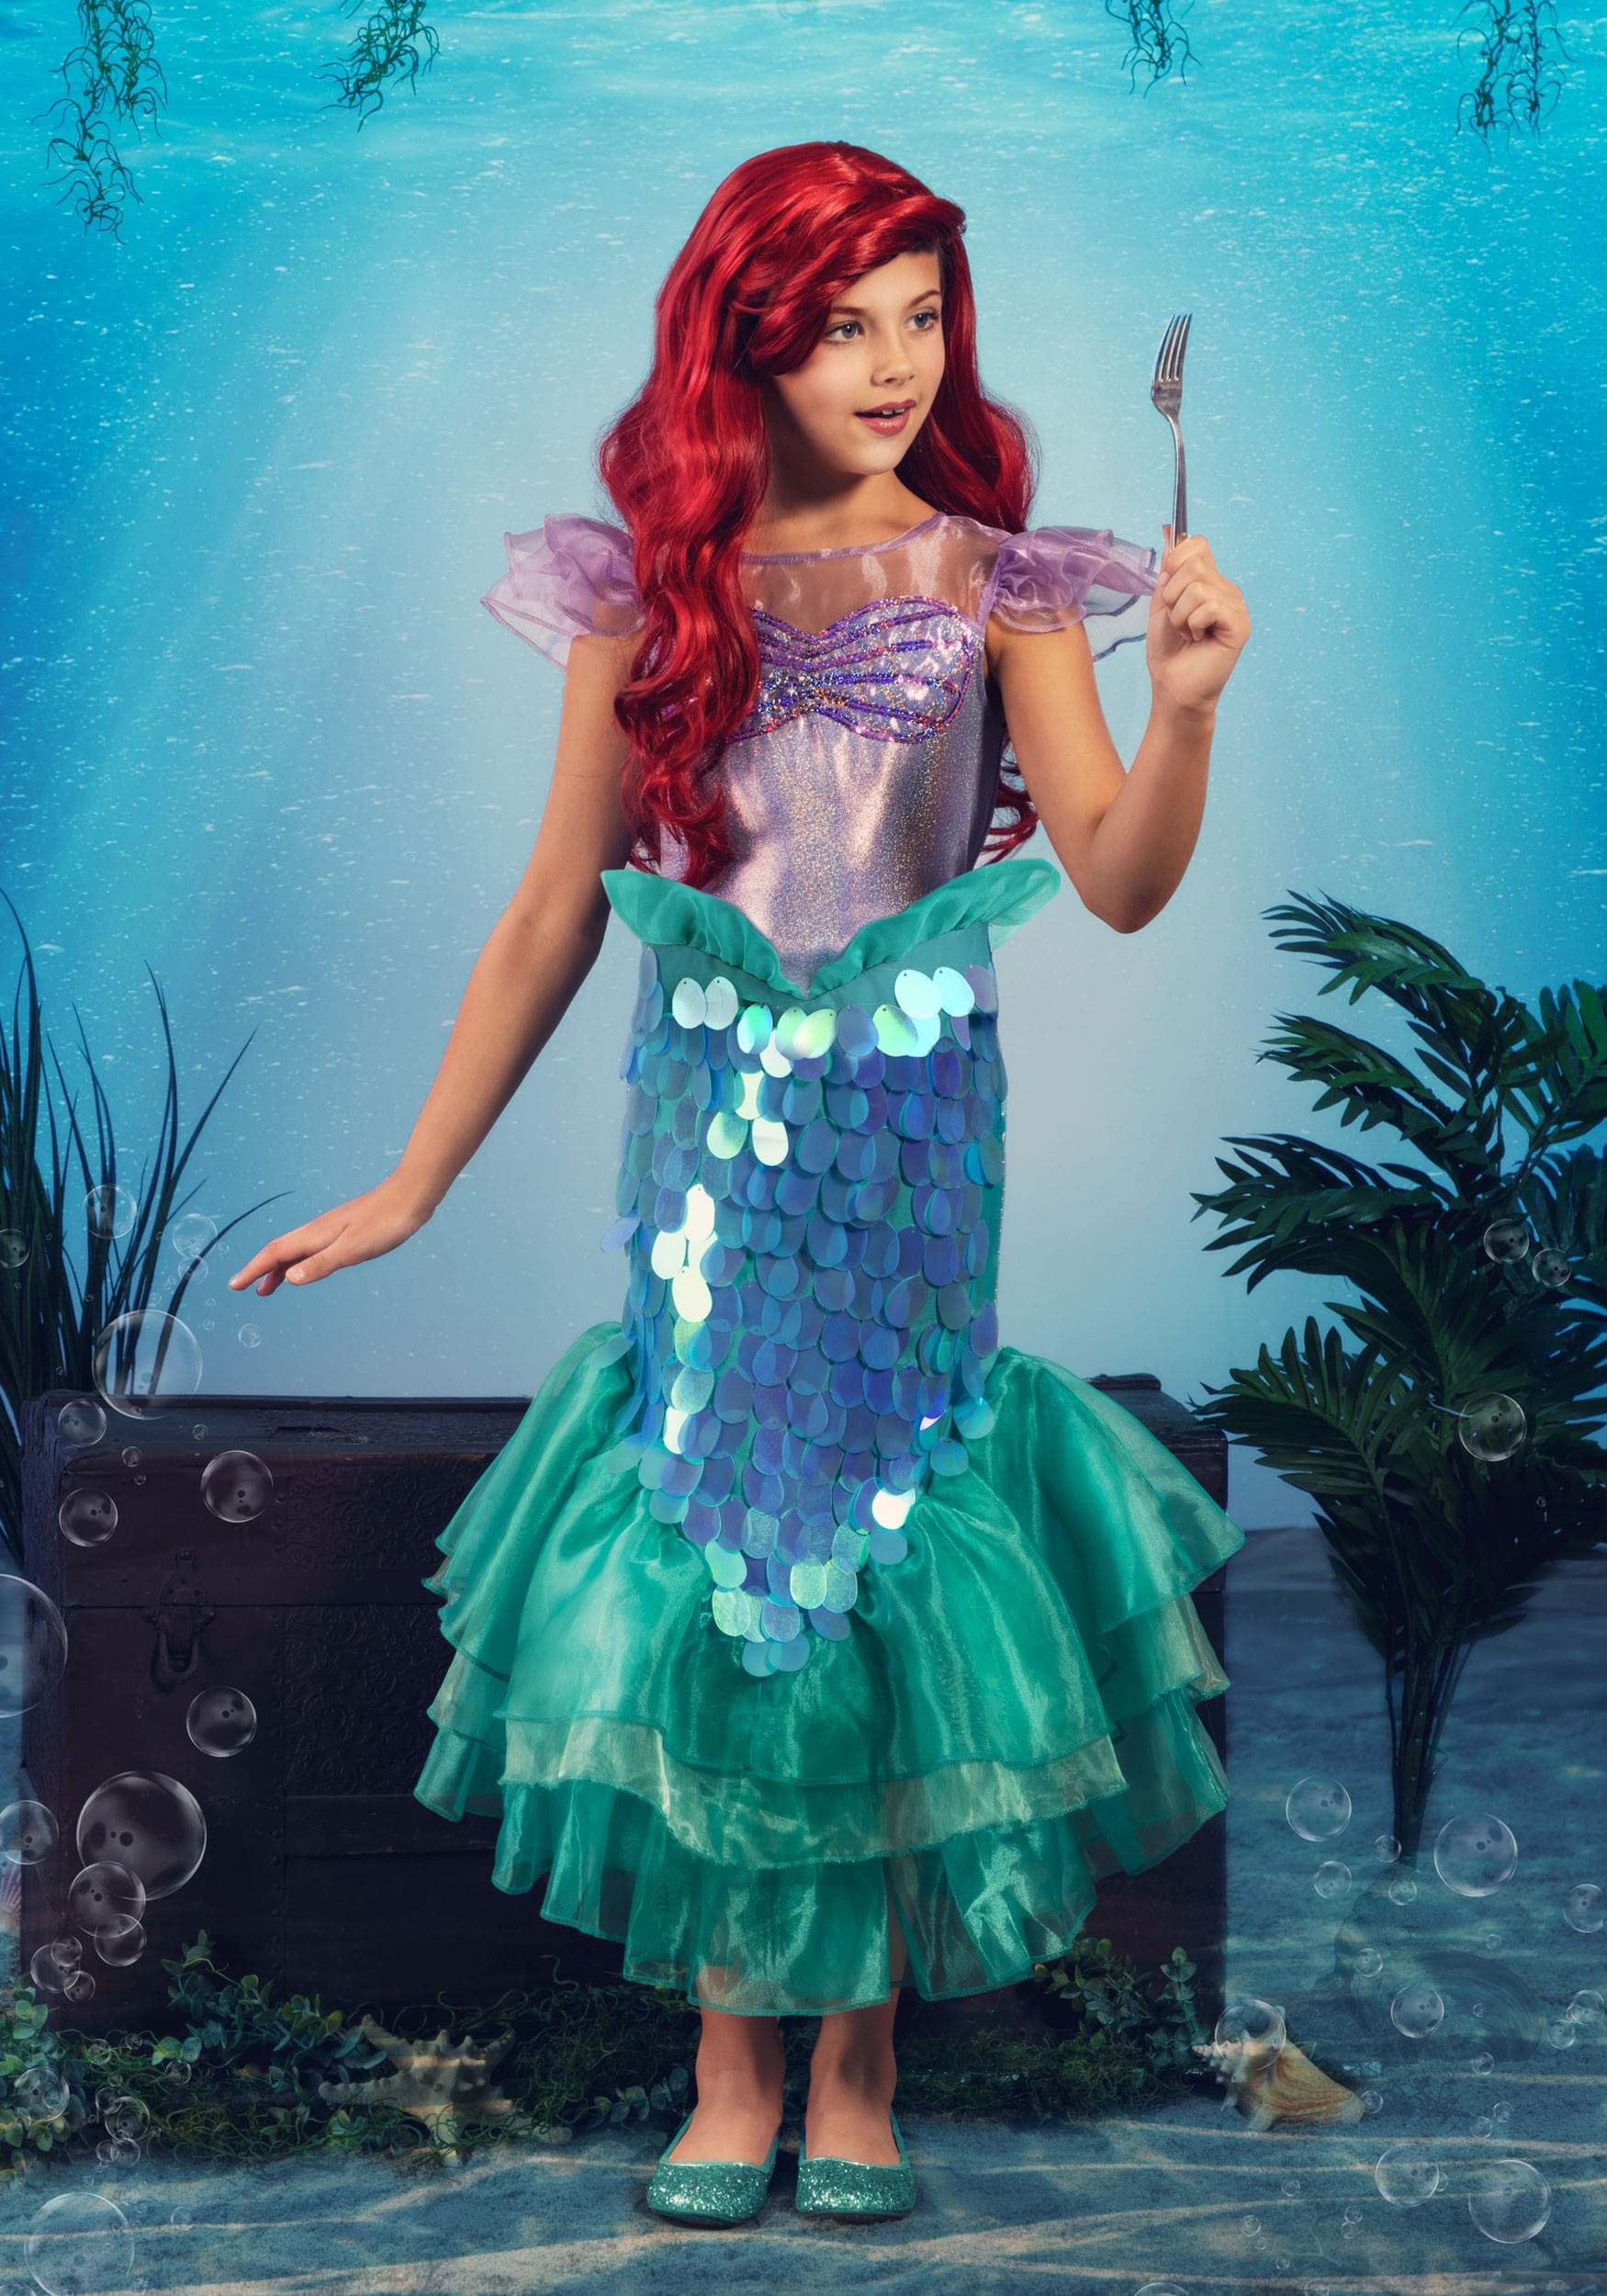 Purse Gloves Teal Dress Disney Princess Ariel Little Mermaid Costume Wig 